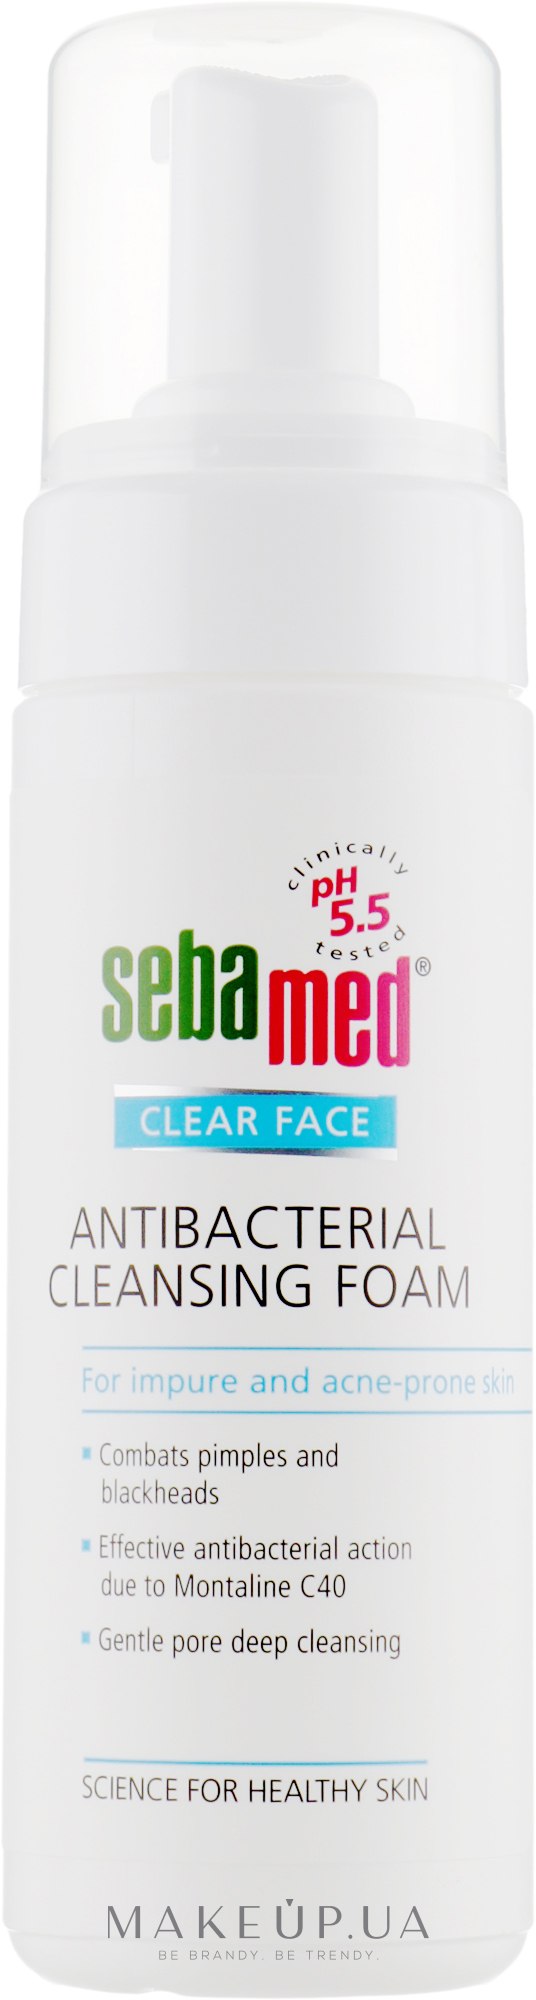 Пенка для лица очищающая антибактериальная - Sebamed Clear Face Antibacterial Cleansing Foam — фото 150ml